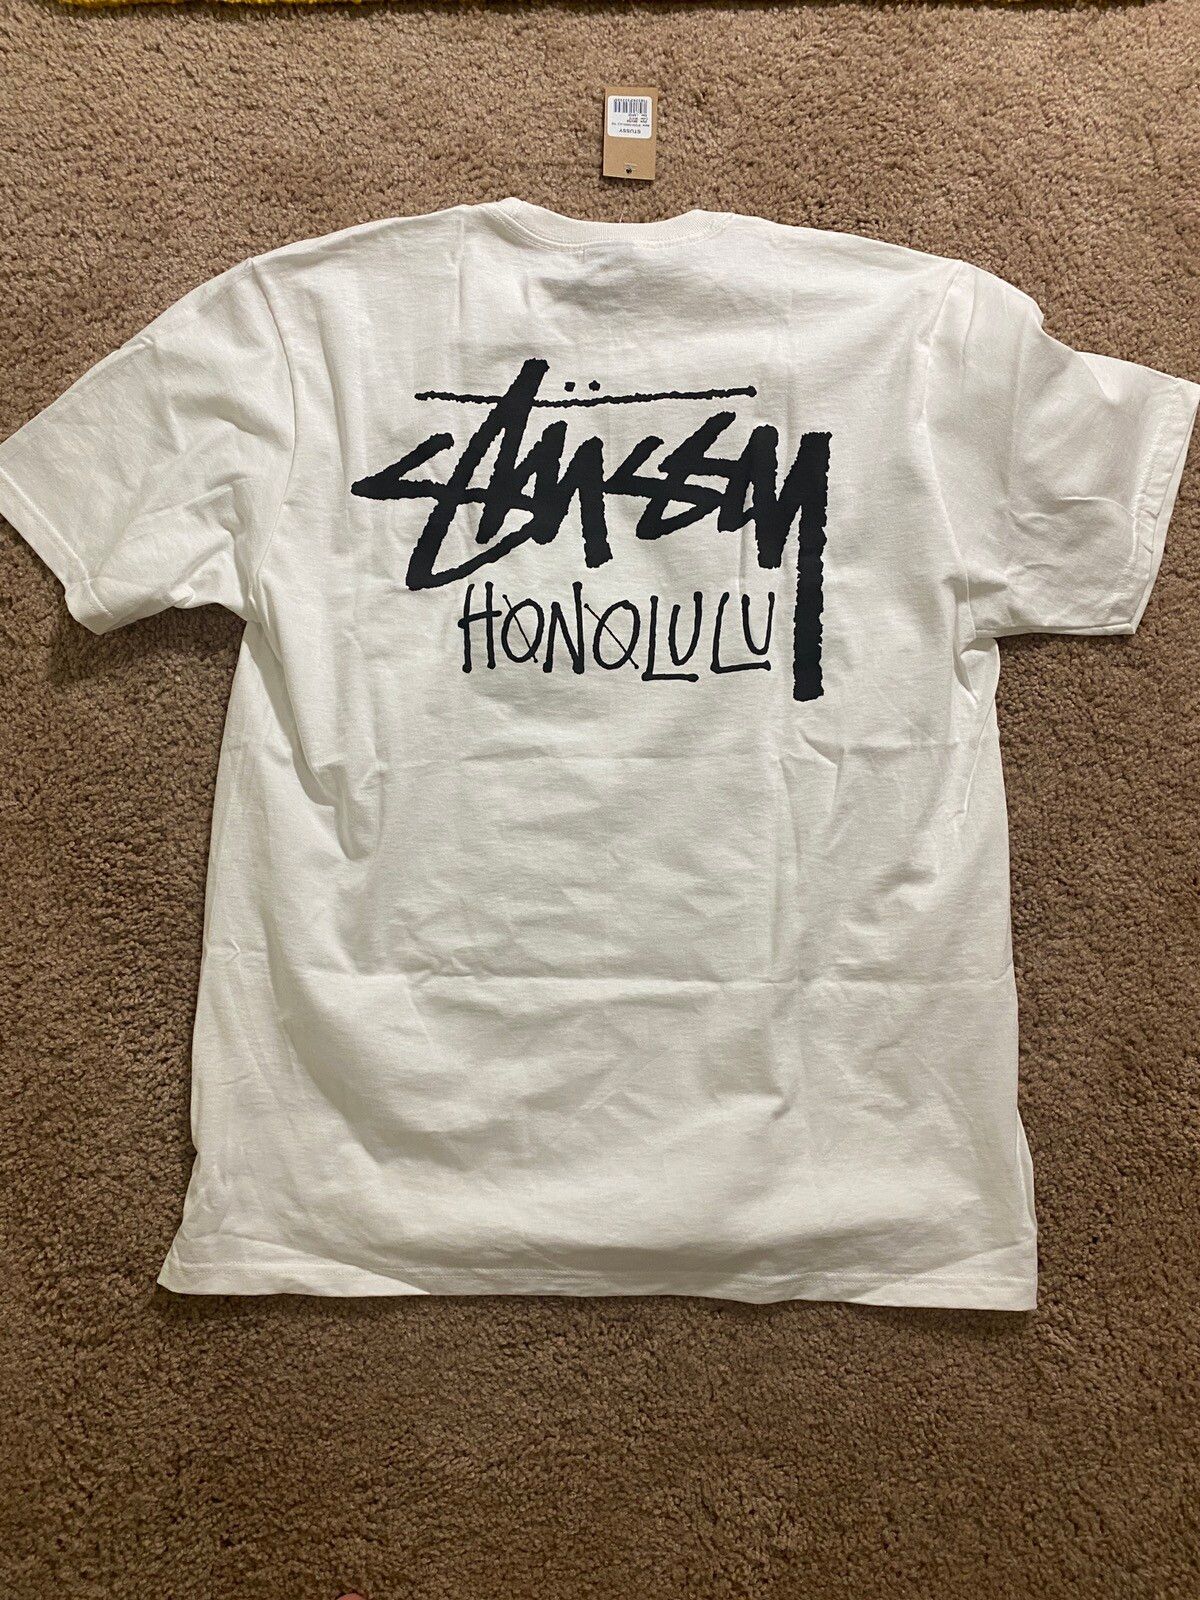 Stussy Stussy Honolulu Hawaii Exclusive Tee Shirt White Large | Grailed